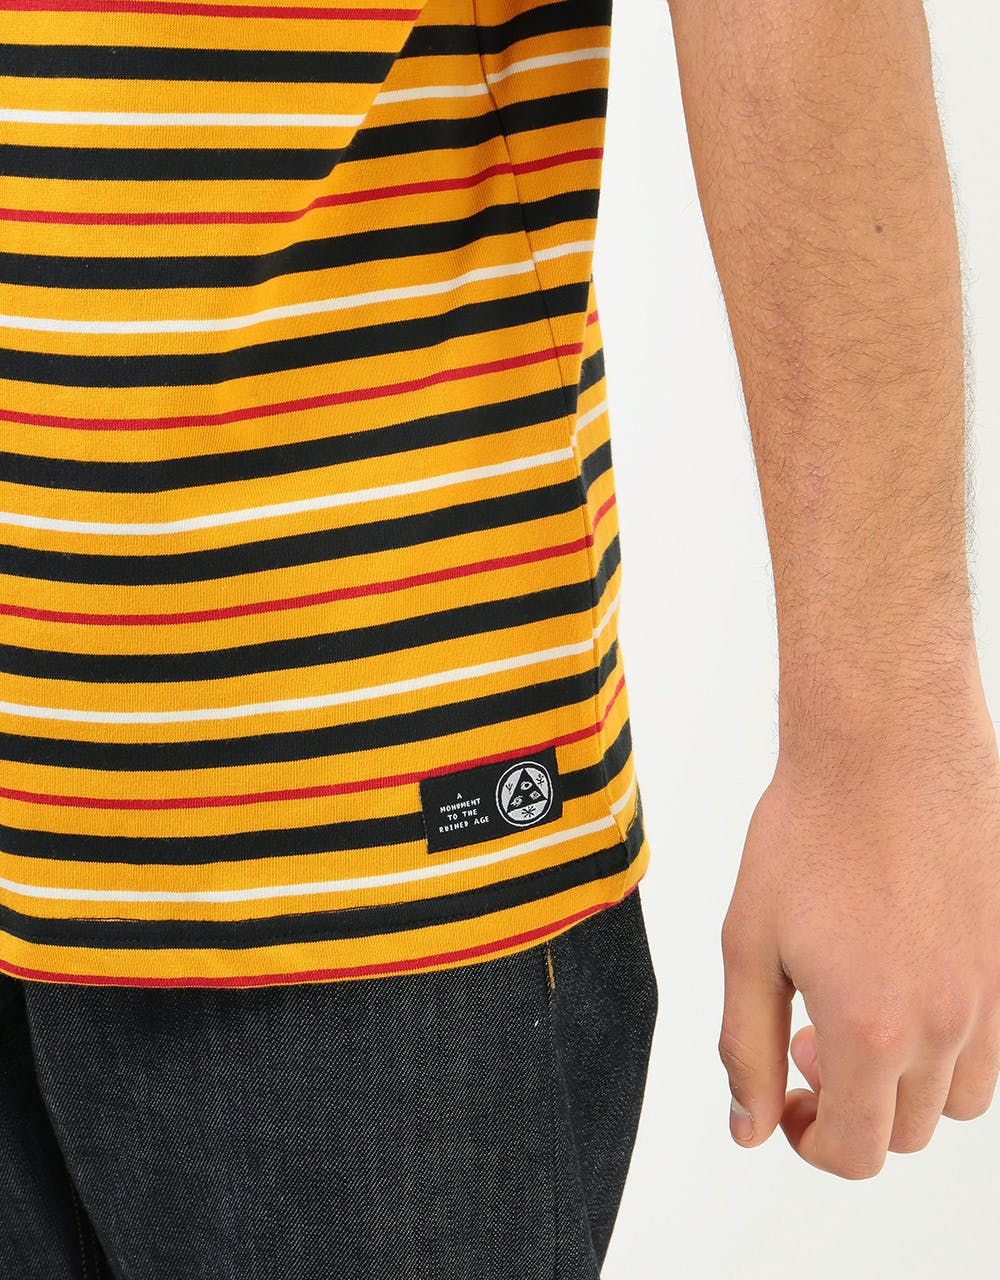 Welcome Surf Stripe S/S Knit T-Shirt - Gold/Black/Bone